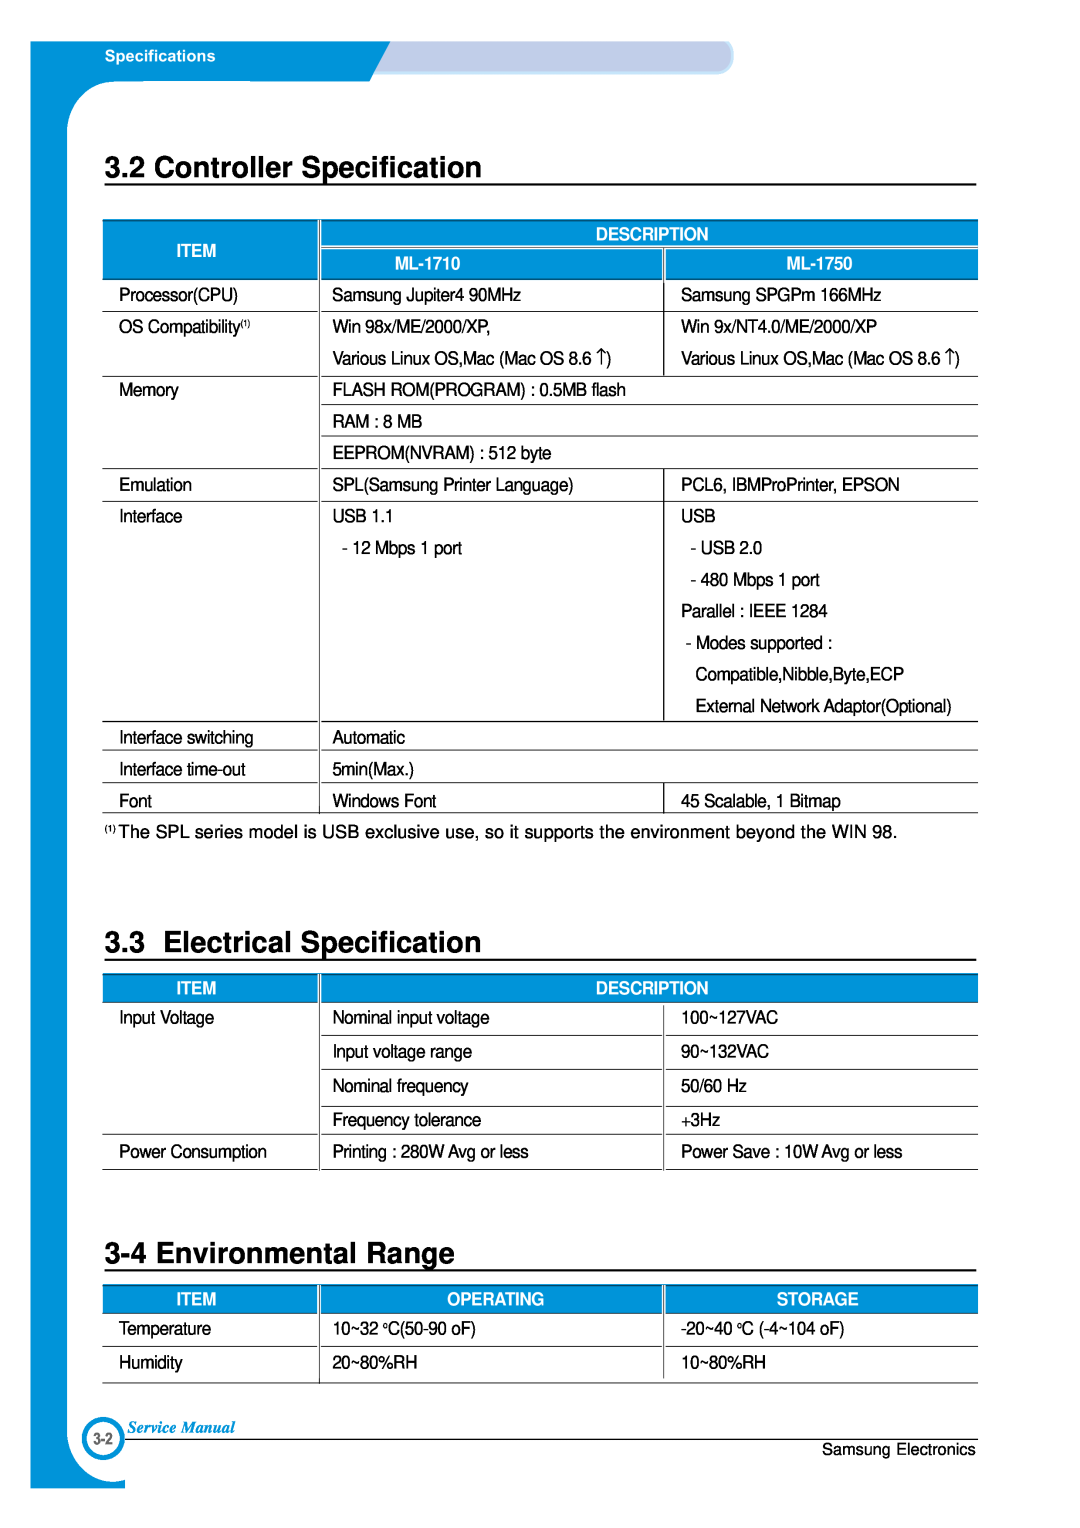 Samsung ML-1700 Controller Specification, Electrical Specification, Environmental Range, Description, ML-1710, ML-1750 